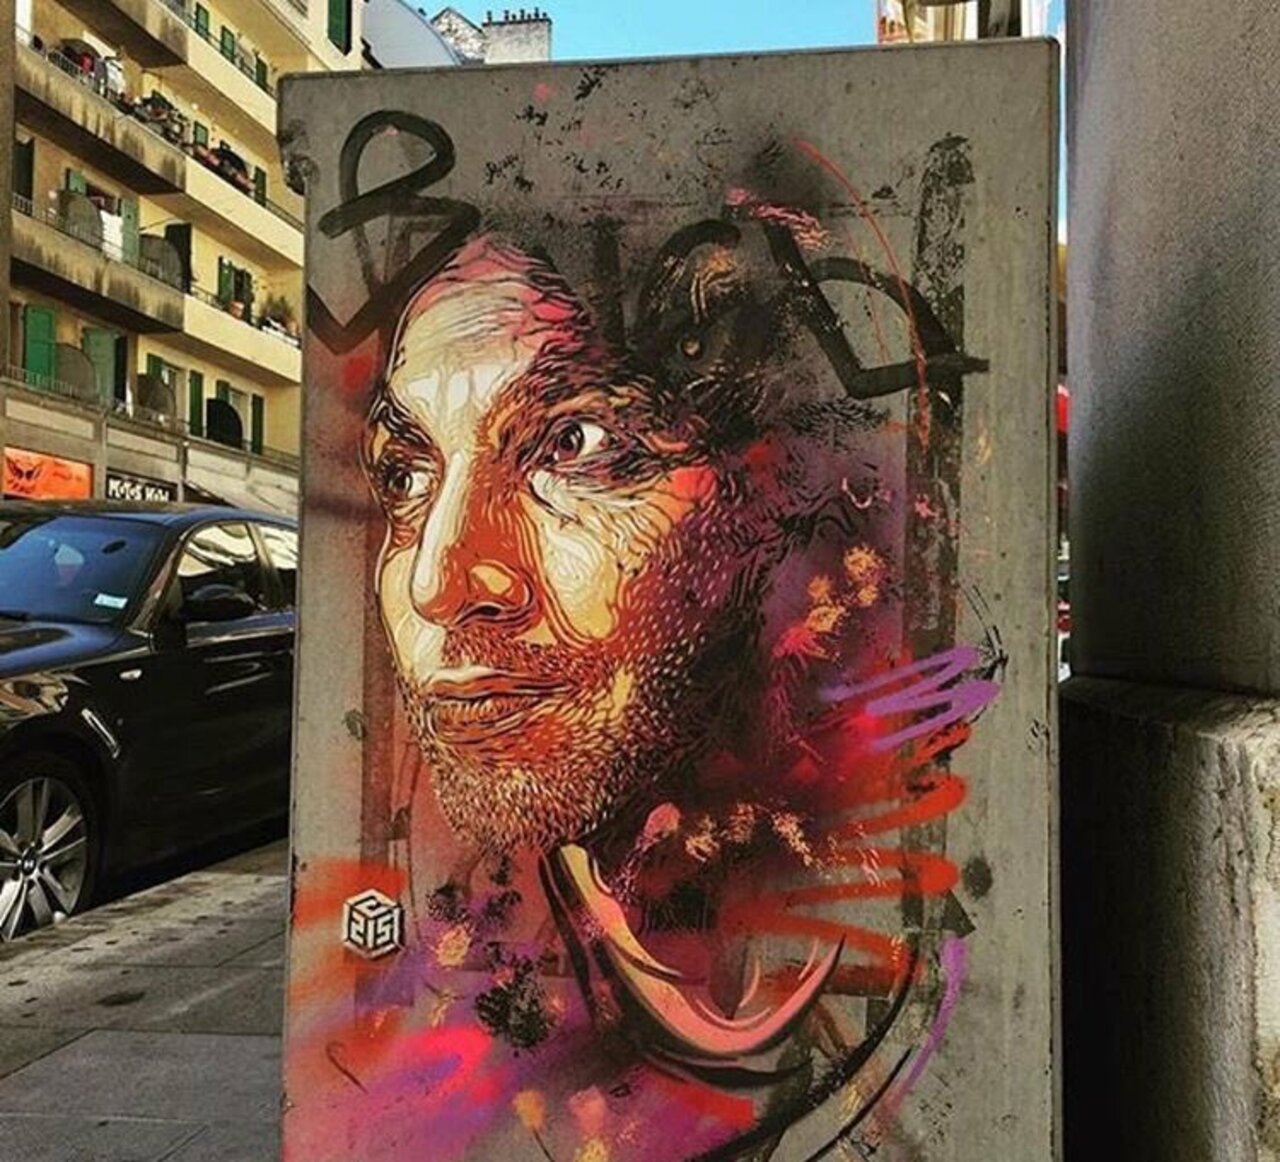 By C215 in Geneva, Switzerland 🇨🇭 #art #mural #graffiti #streetart #Switzerland https://t.co/bRs0z7UOqP